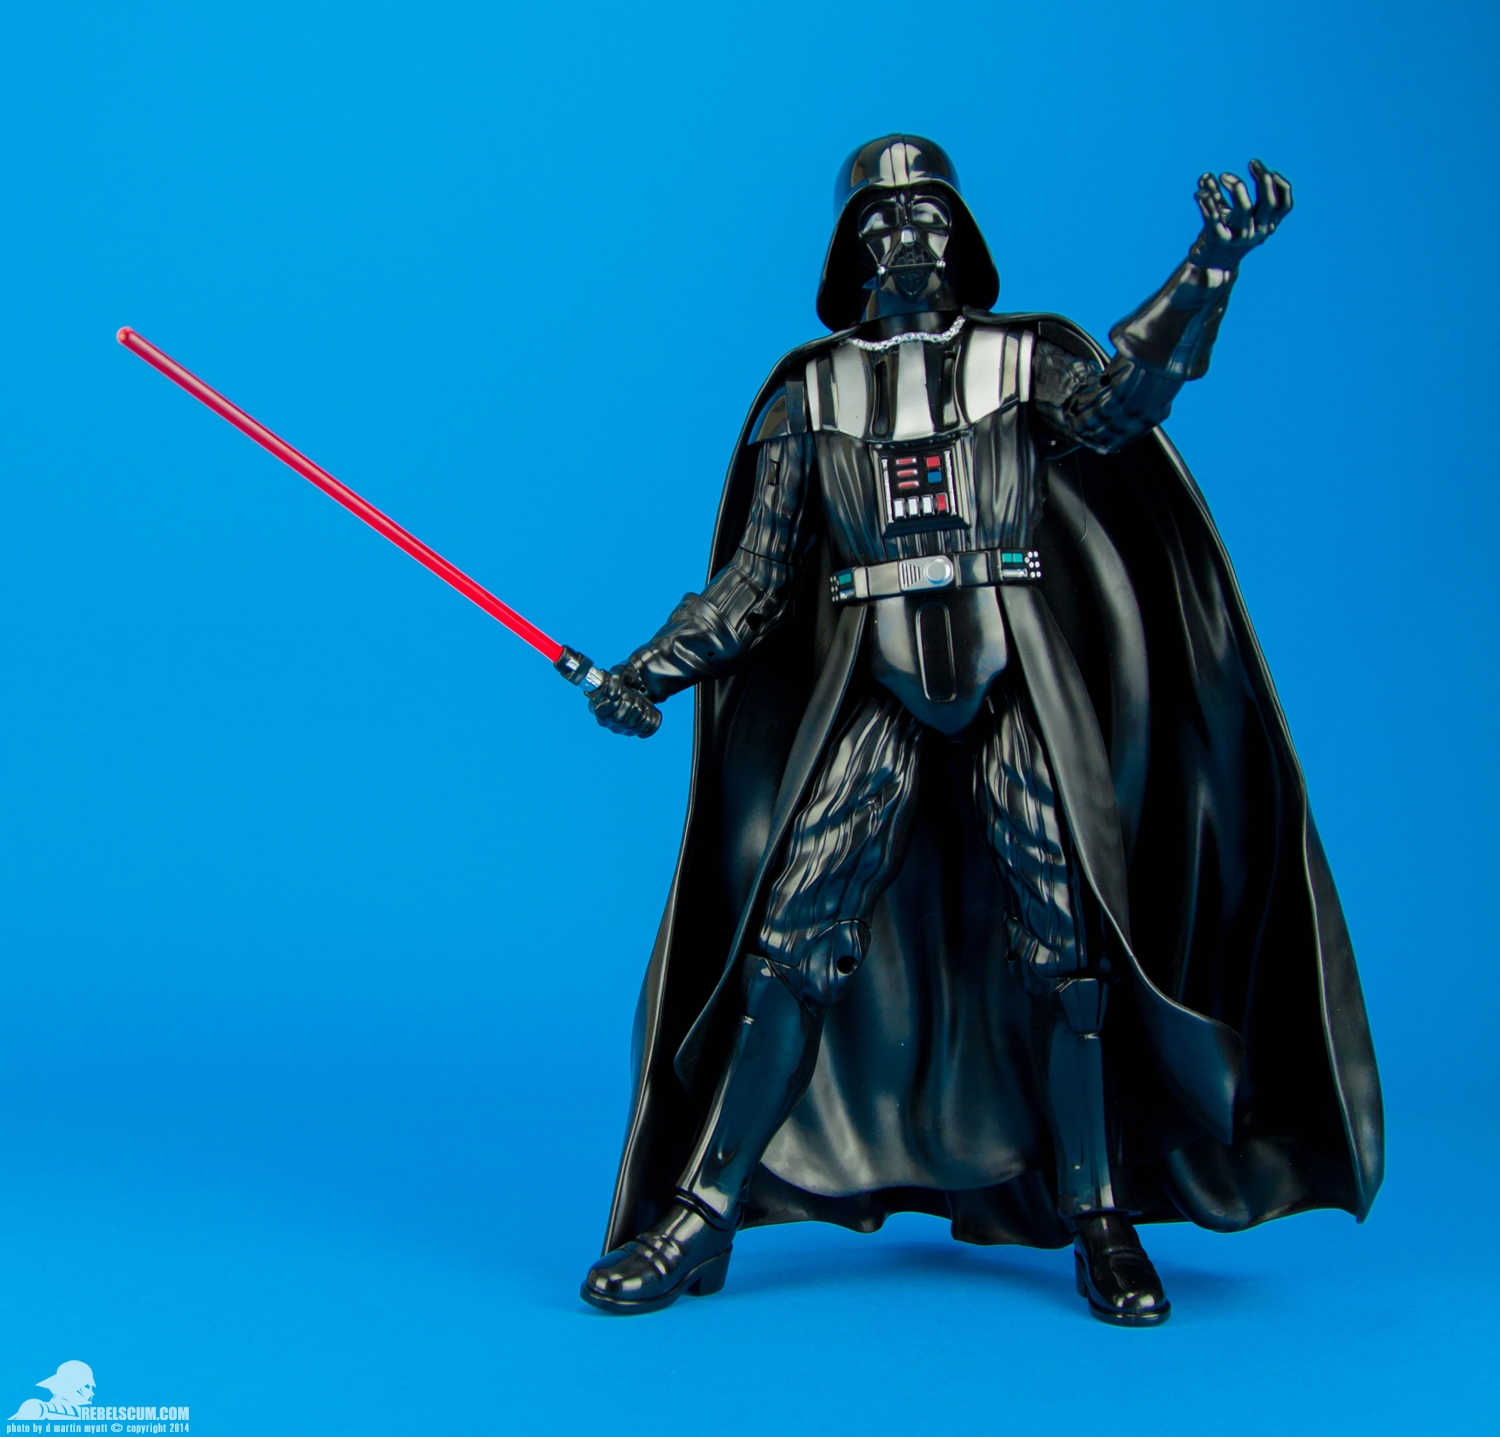 Darth-Vader-Talking-Disney-Store-Exclusive-Star-Wars-011.jpg